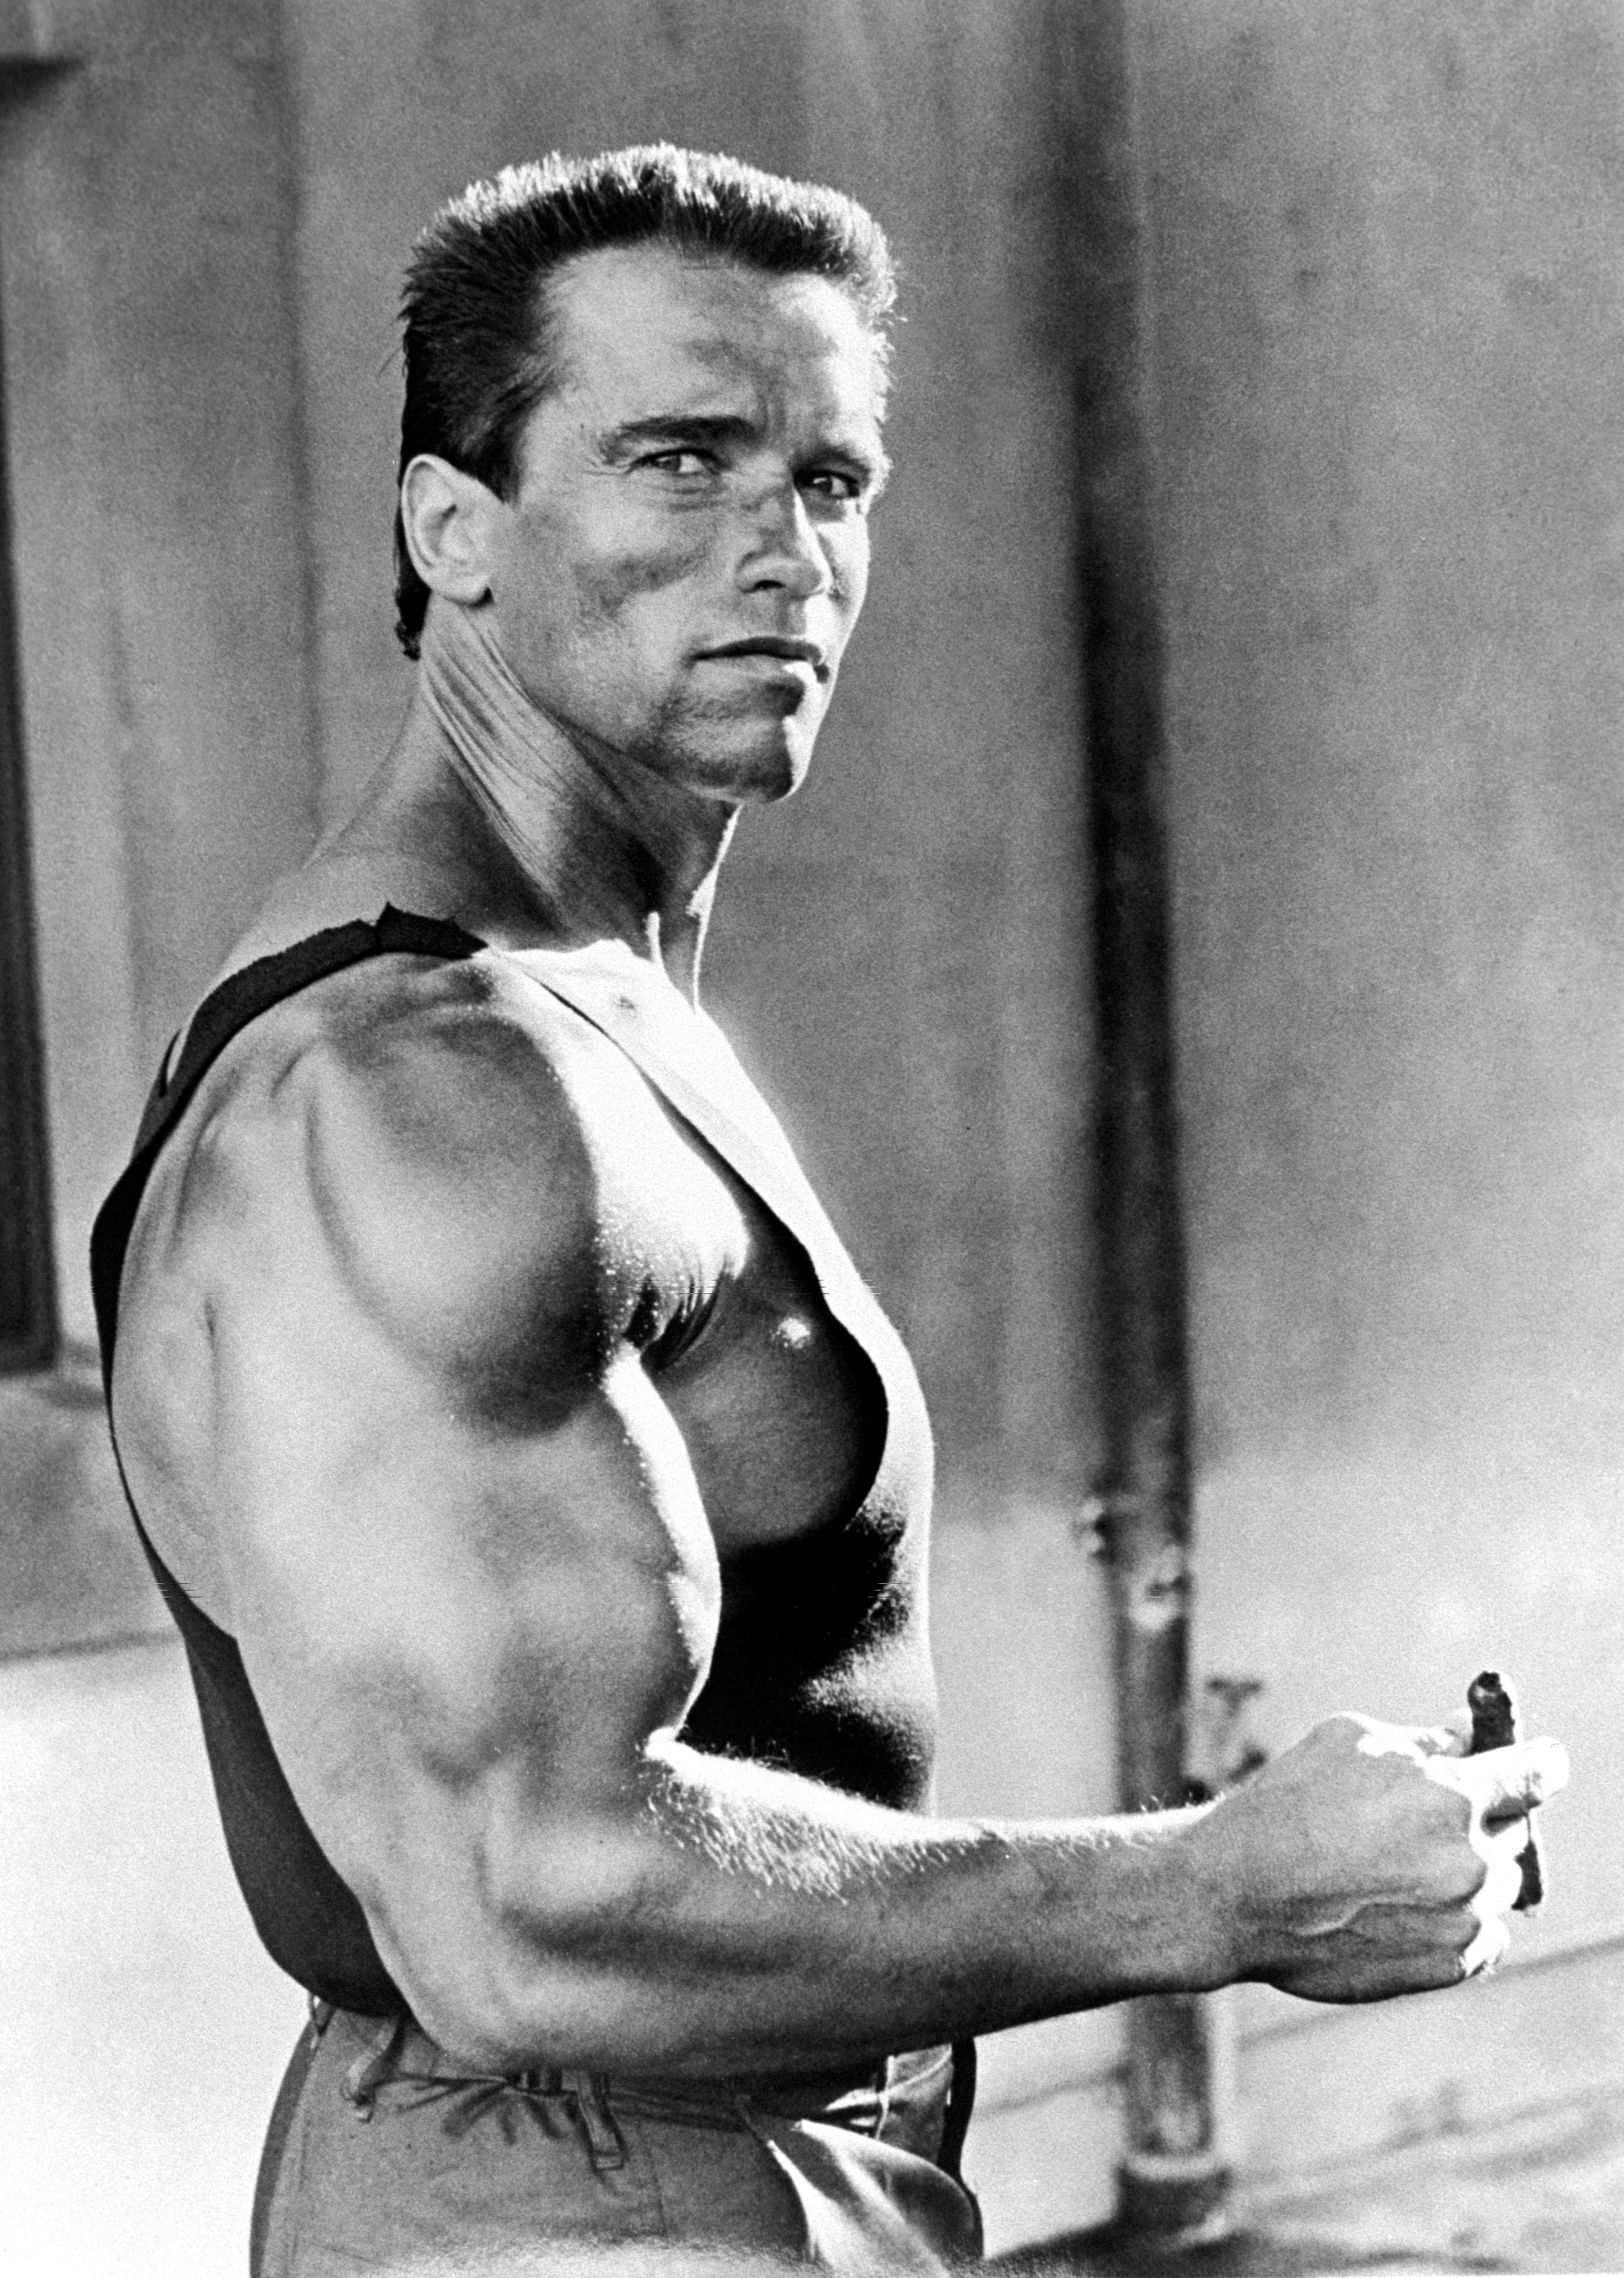 Unknown Black and White Photograph - Arnold Schwarzenegger "Commando" Globe Photos Fine Art Print